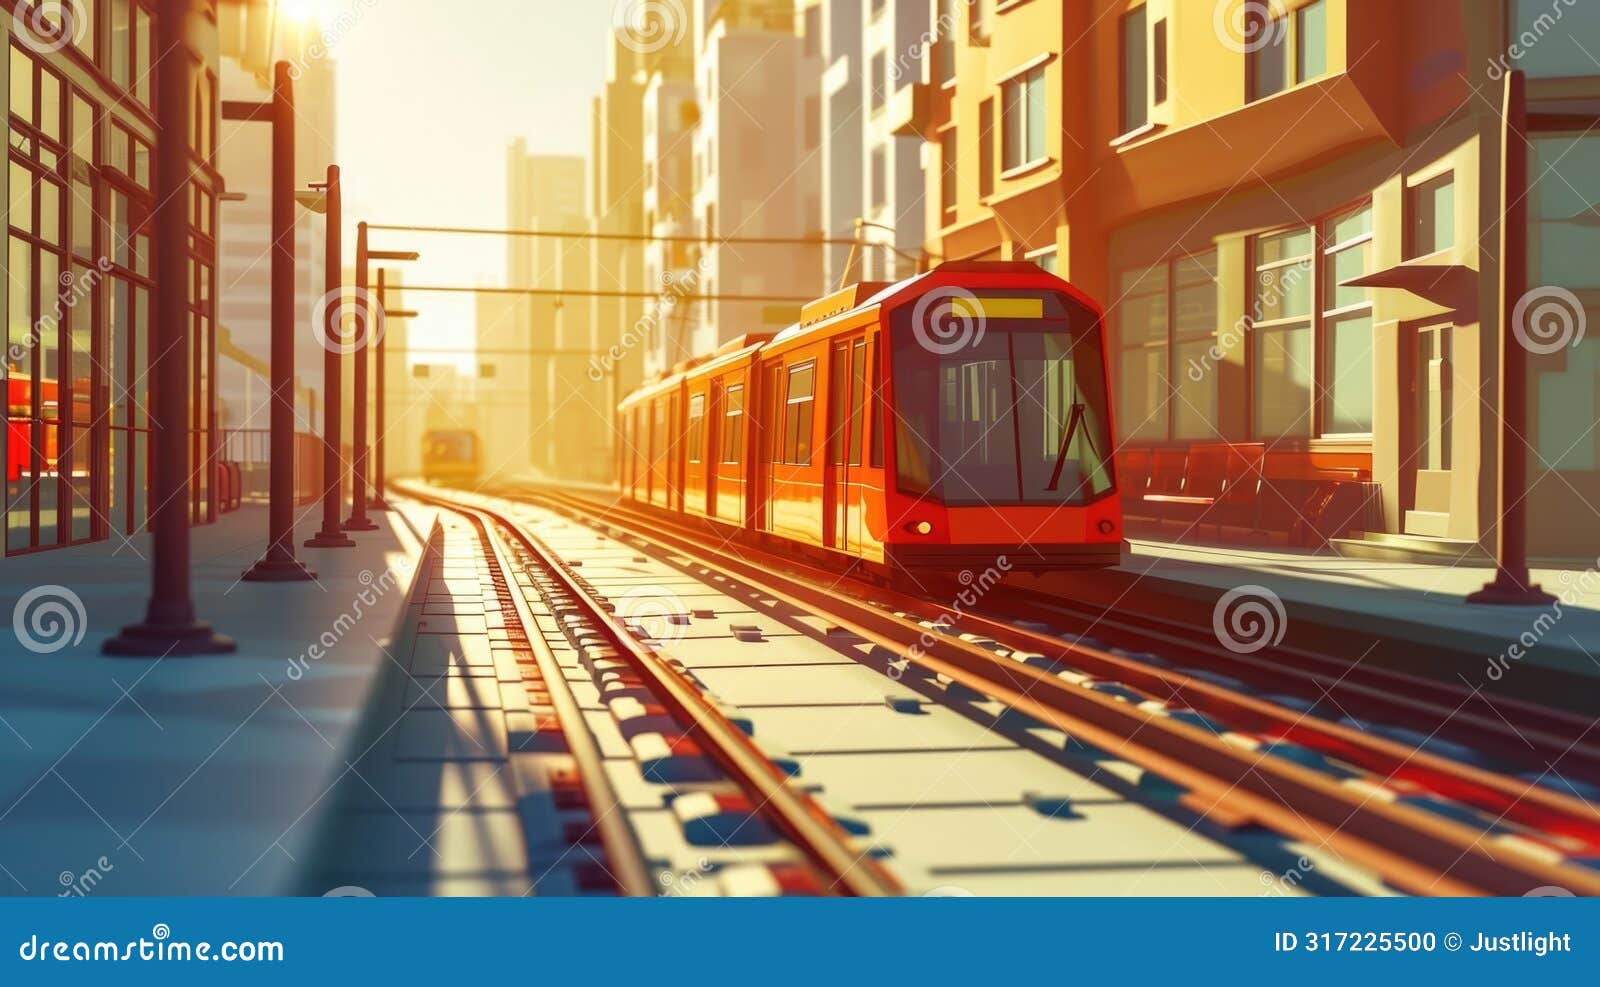 cartoon digital avatars of metromaven a true expert in navigating the citys public transportation system, metromaven